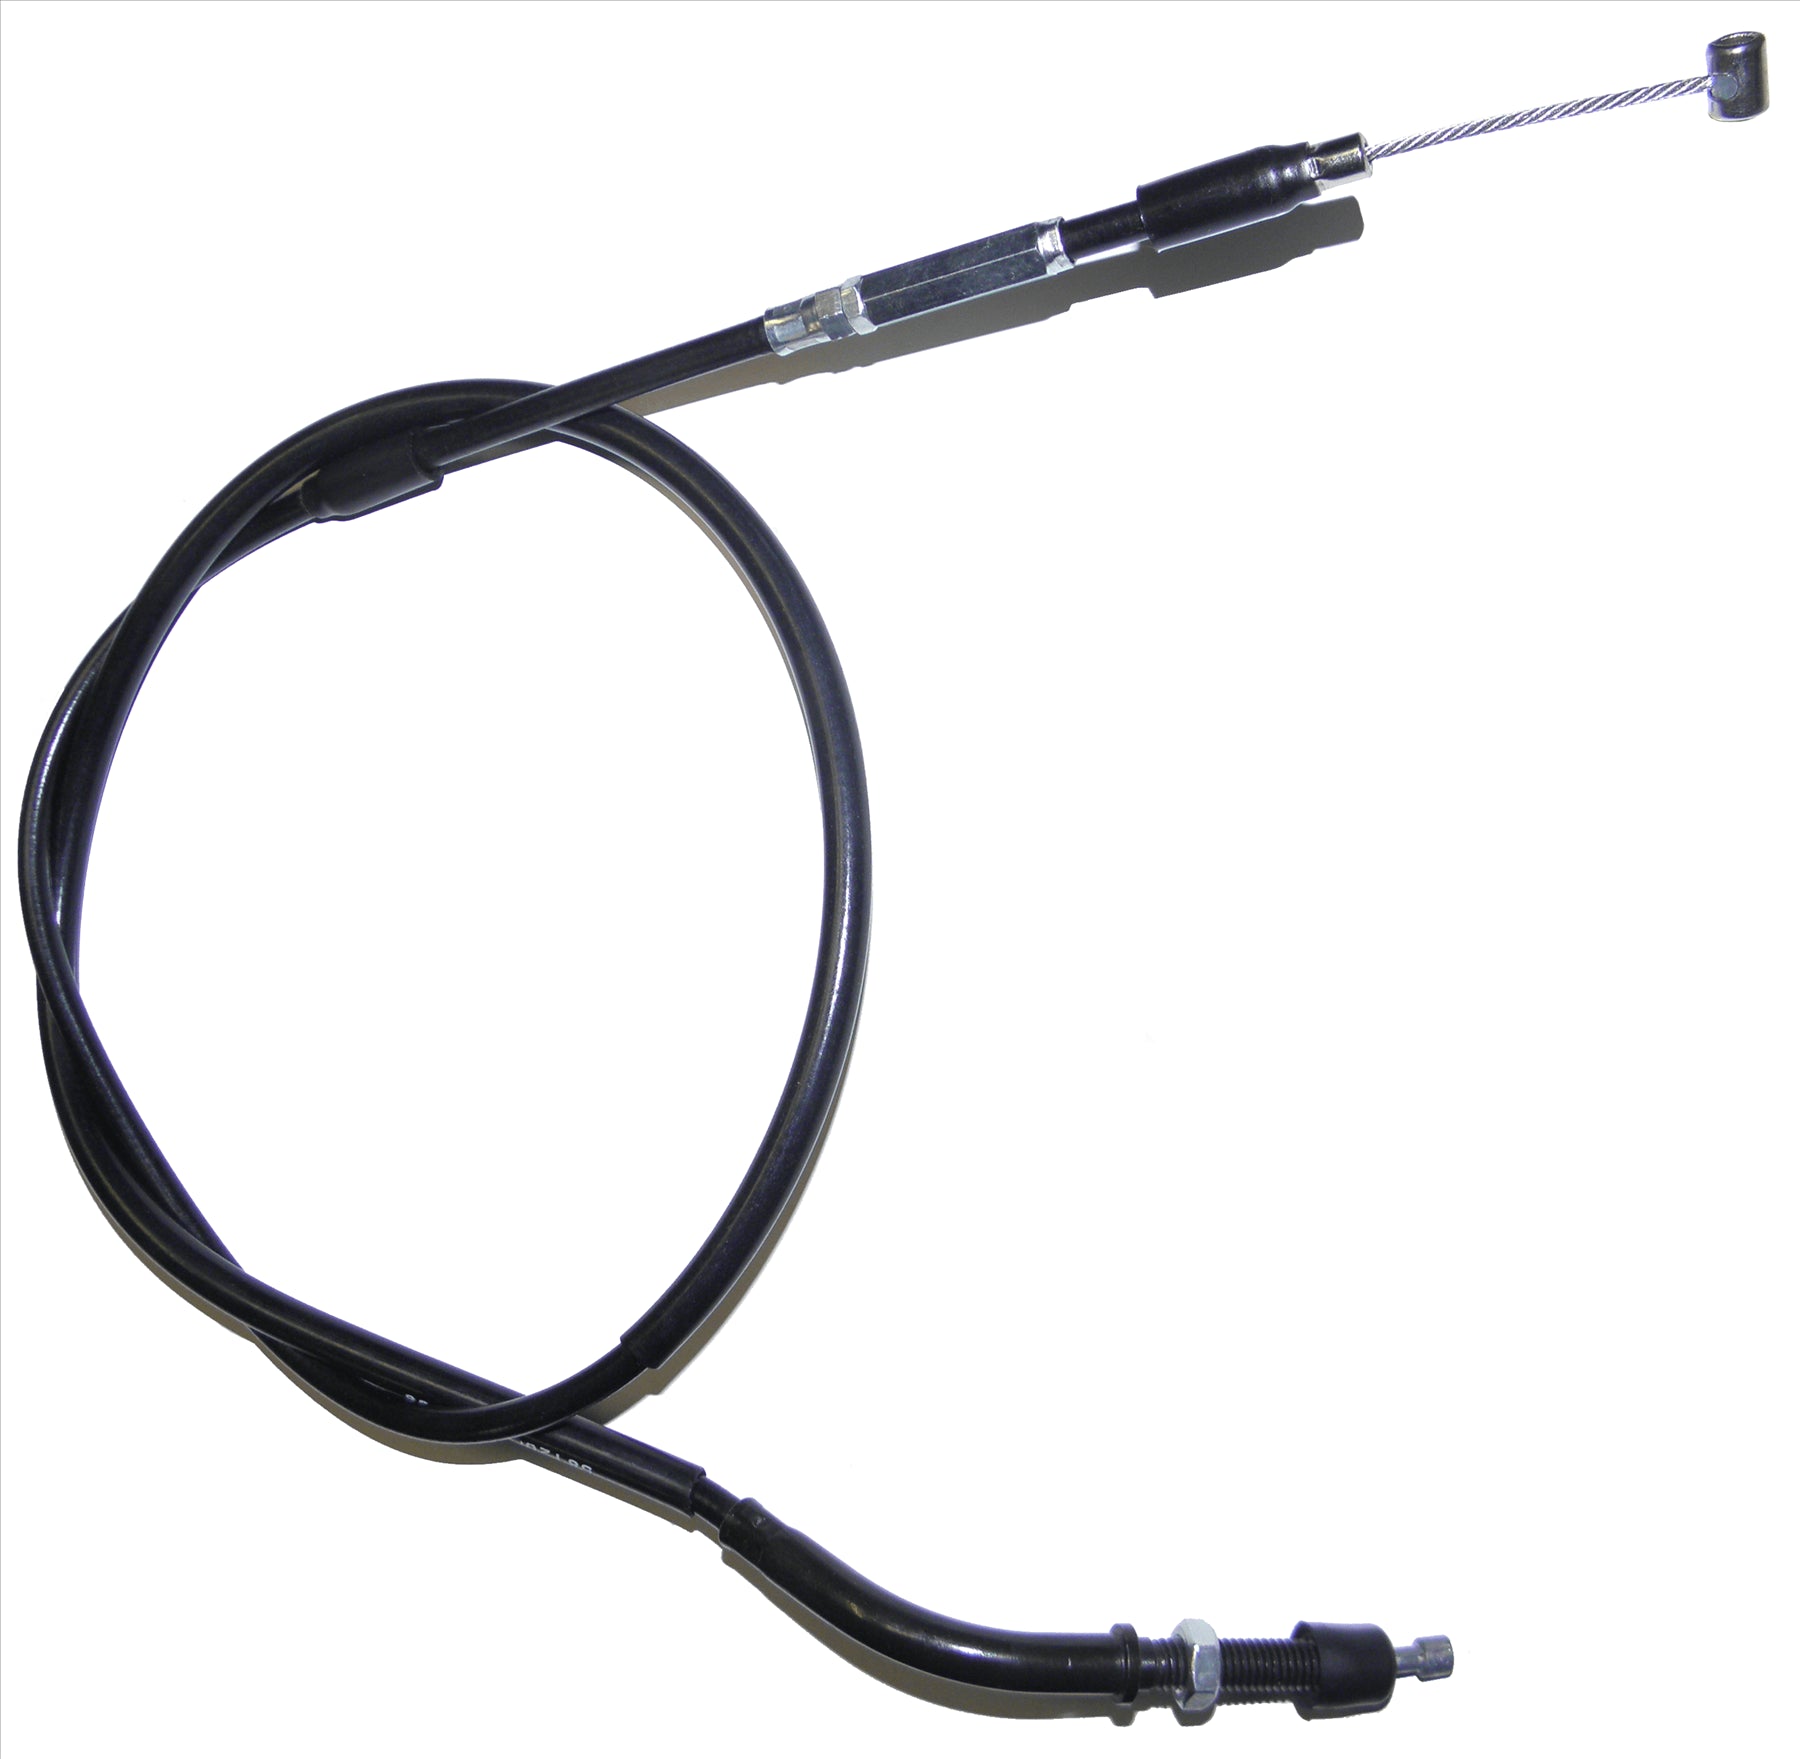 Apico Black Clutch Cable For Honda CRF 450R 2002-2004